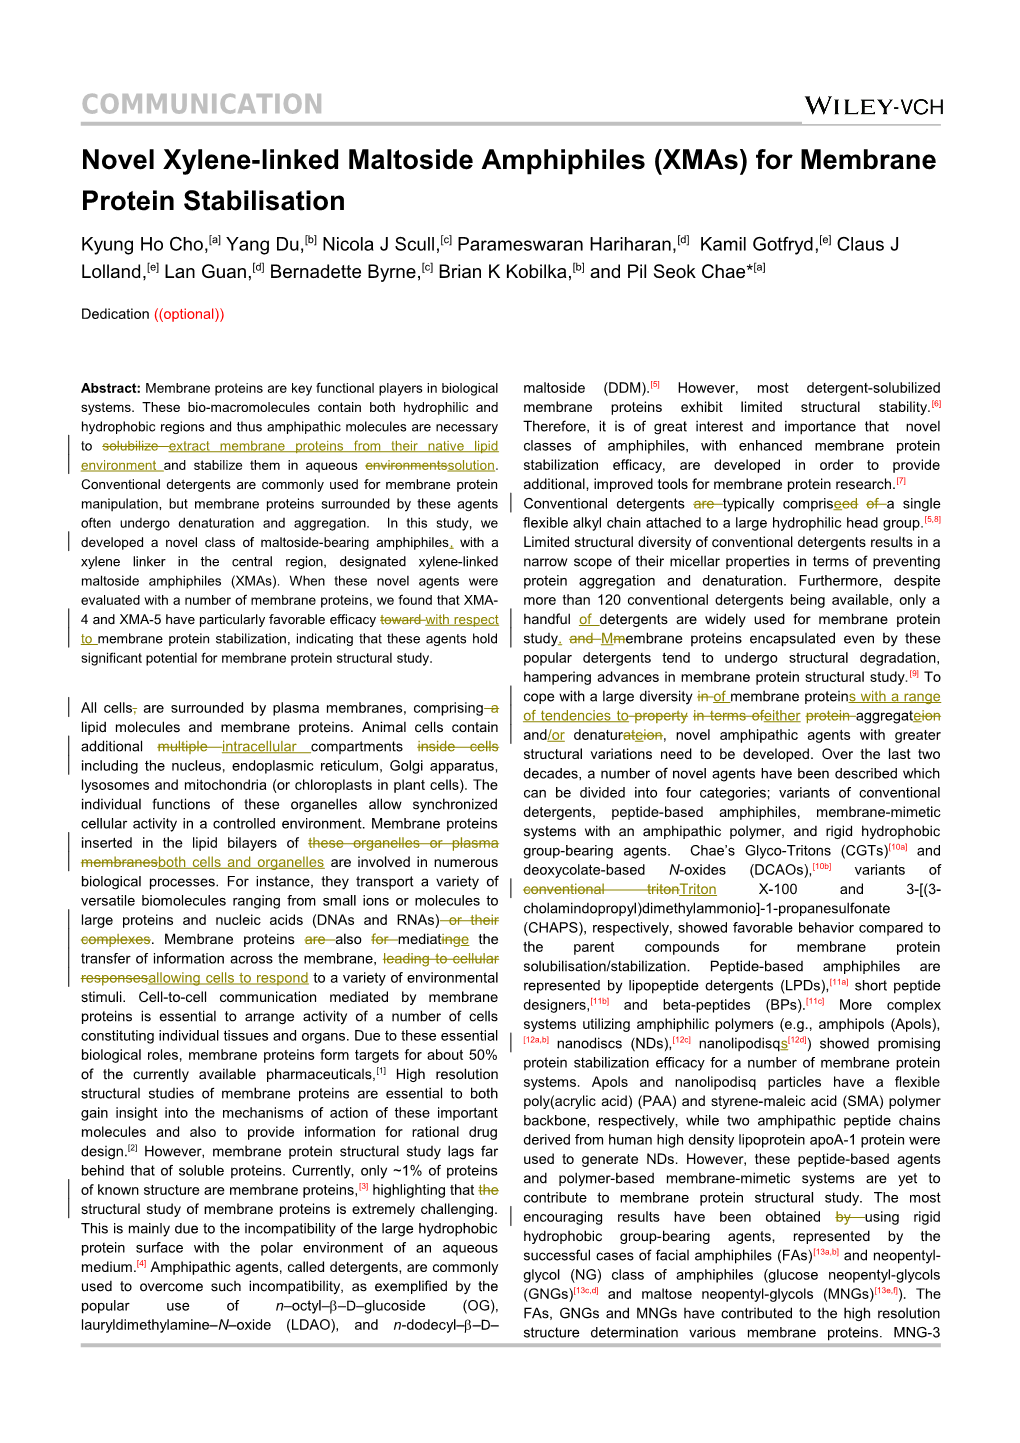 Novel Xylene-Linked Maltoside Amphiphiles (Xmas) for Membrane Protein Stabilisation